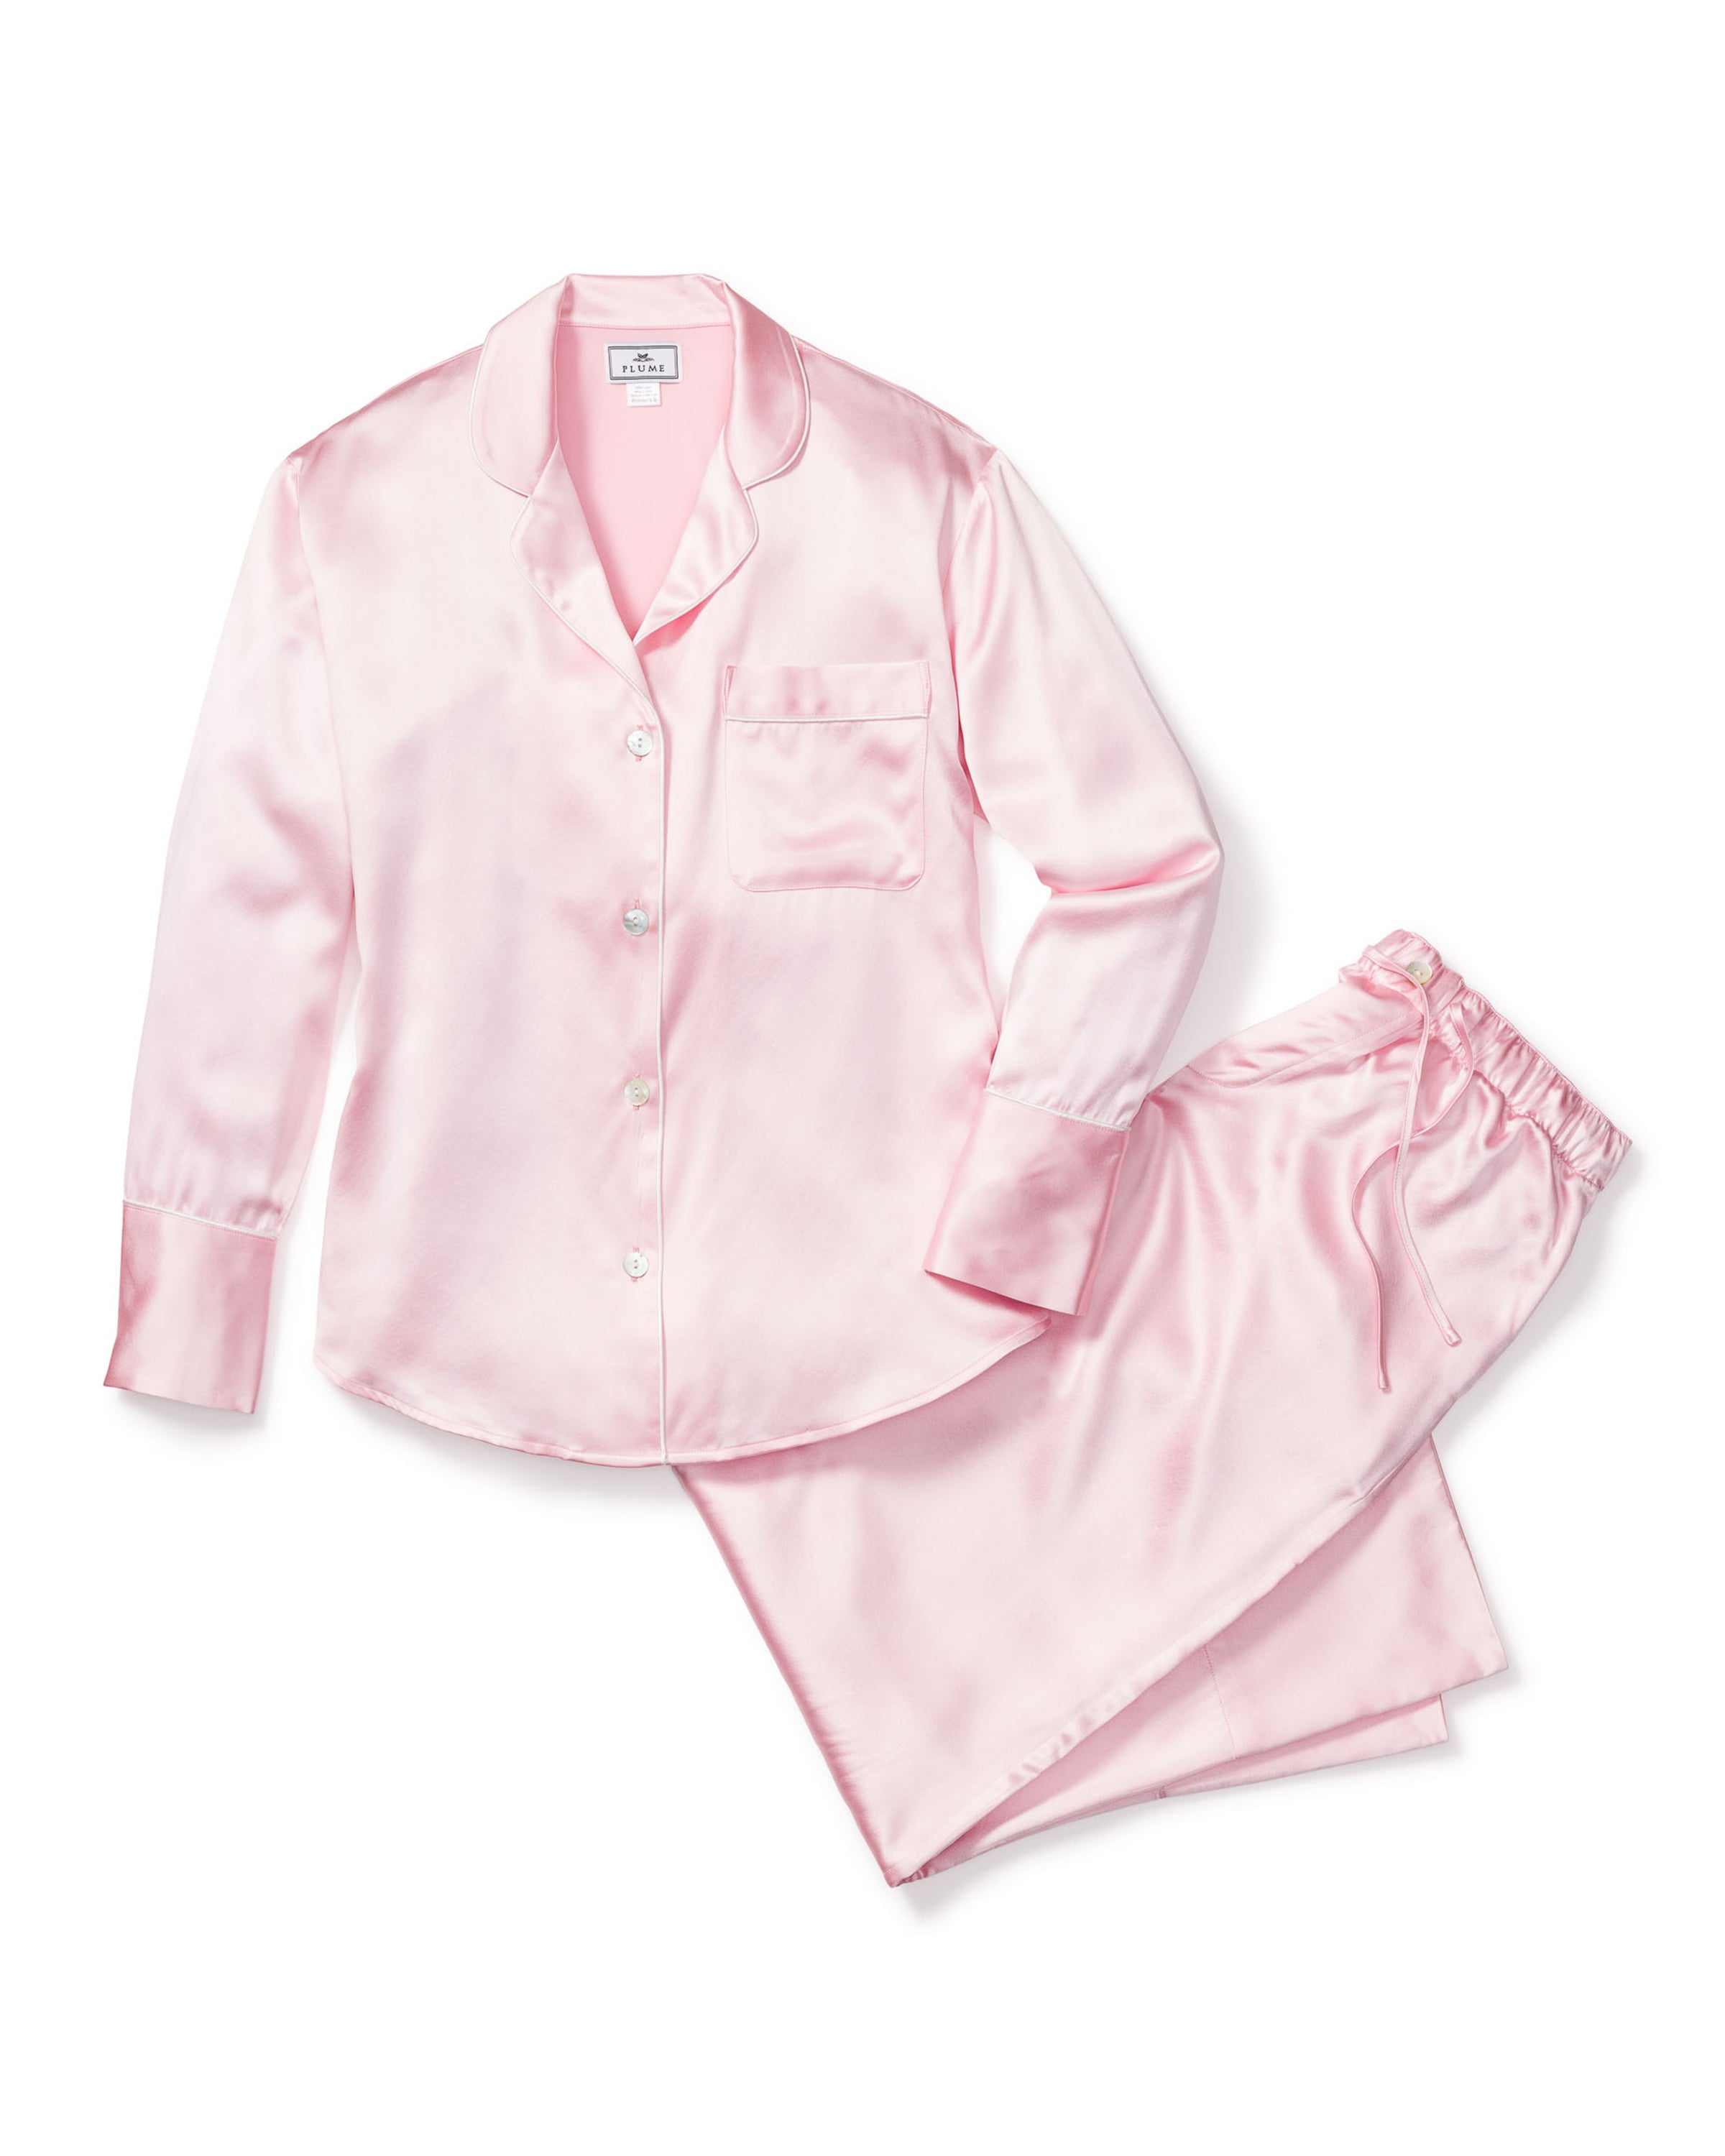 Powder pink silk pyjama set